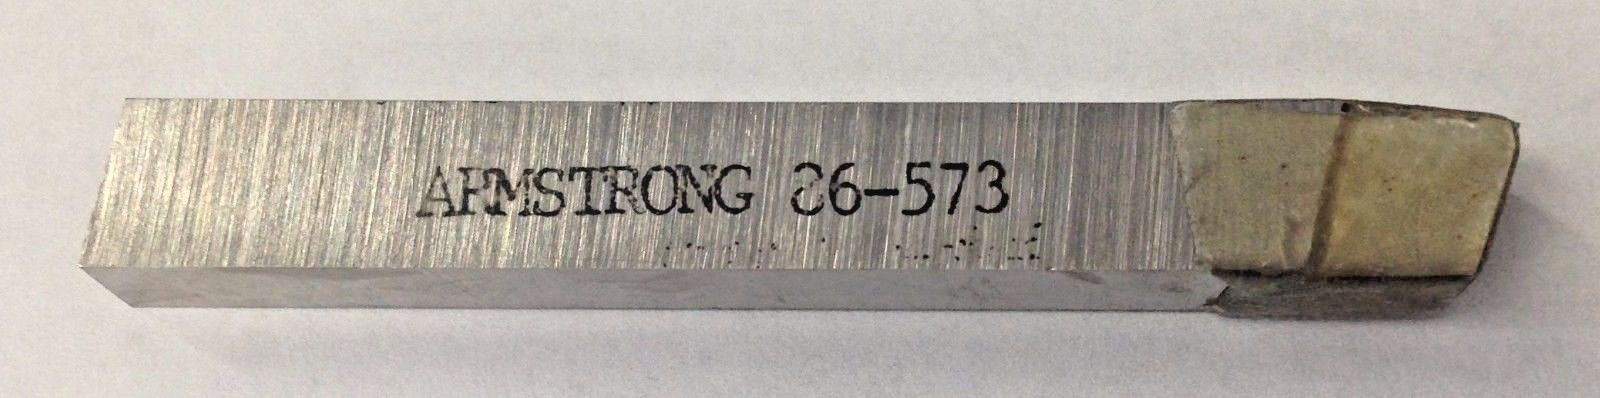 Armstrong 86-573 Ground To Form Tool Bit 5/16" x 5/16" USA